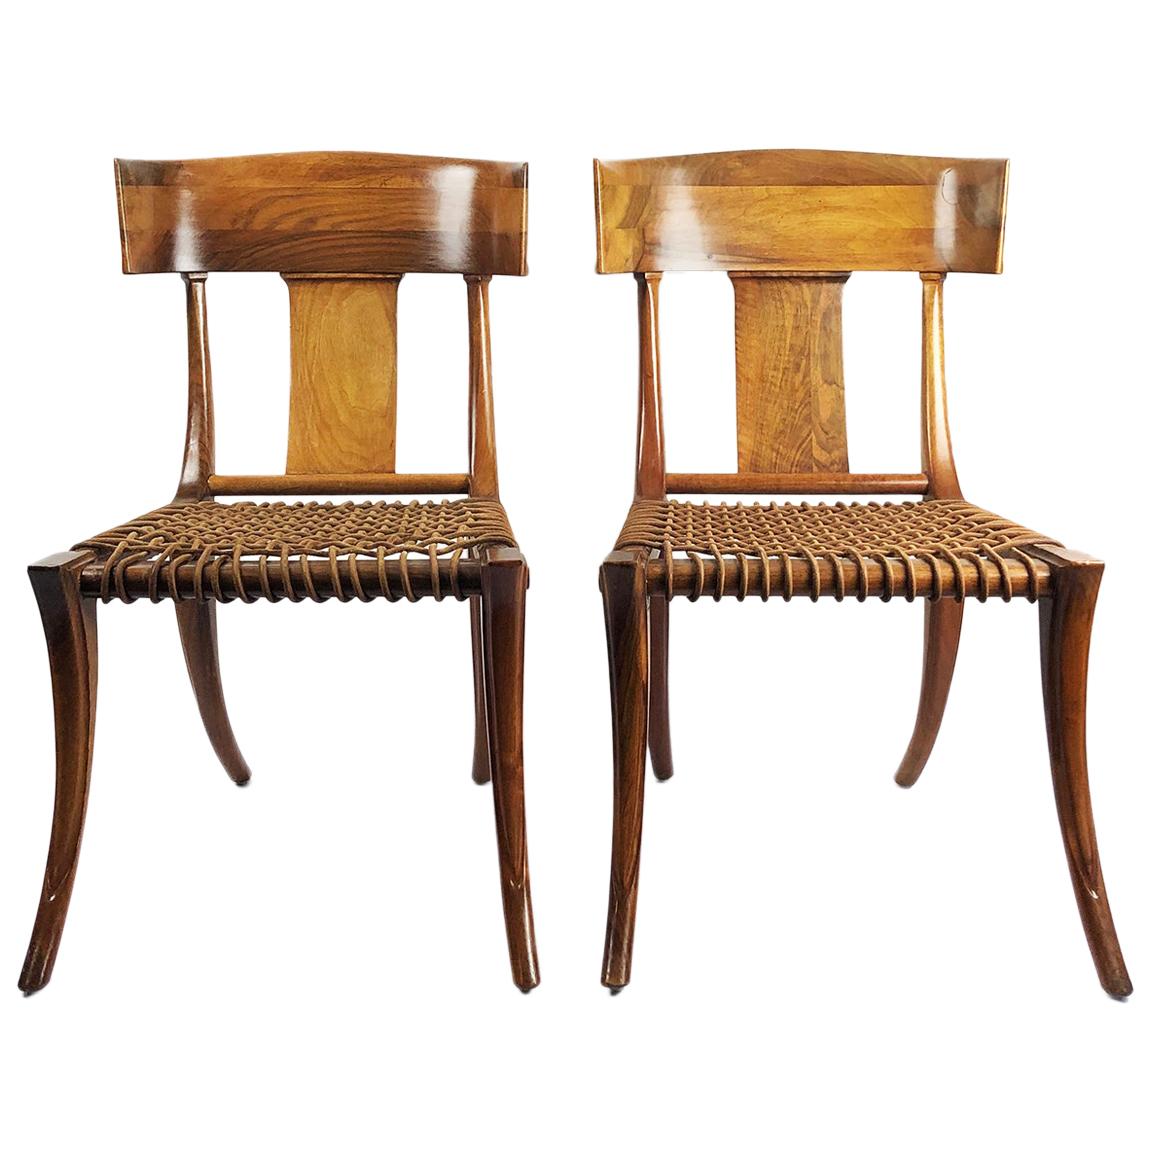 Pair of Klismos Chairs Attributed to Robsjohn-Gibbings